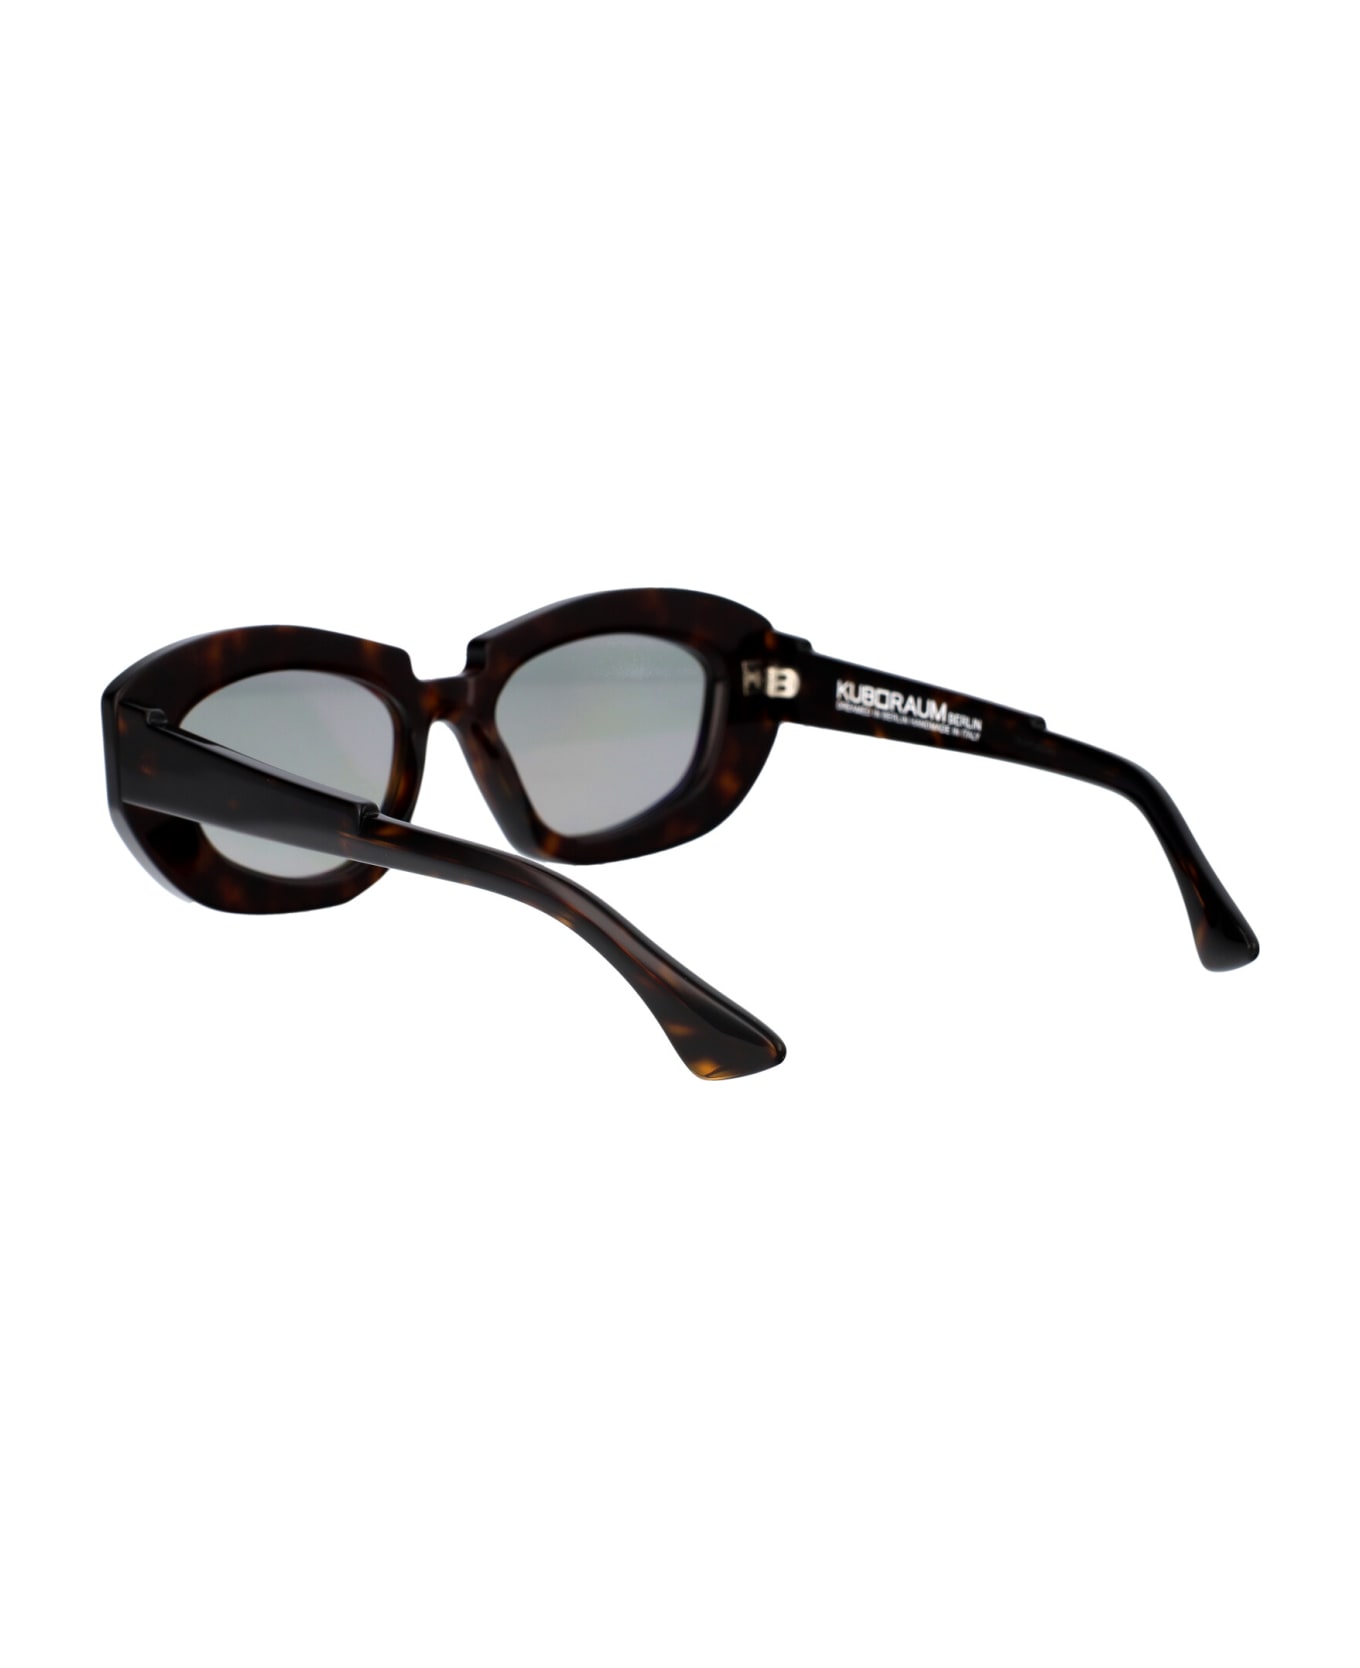 Kuboraum Maske X23 Sunglasses - TS grey1* サングラス